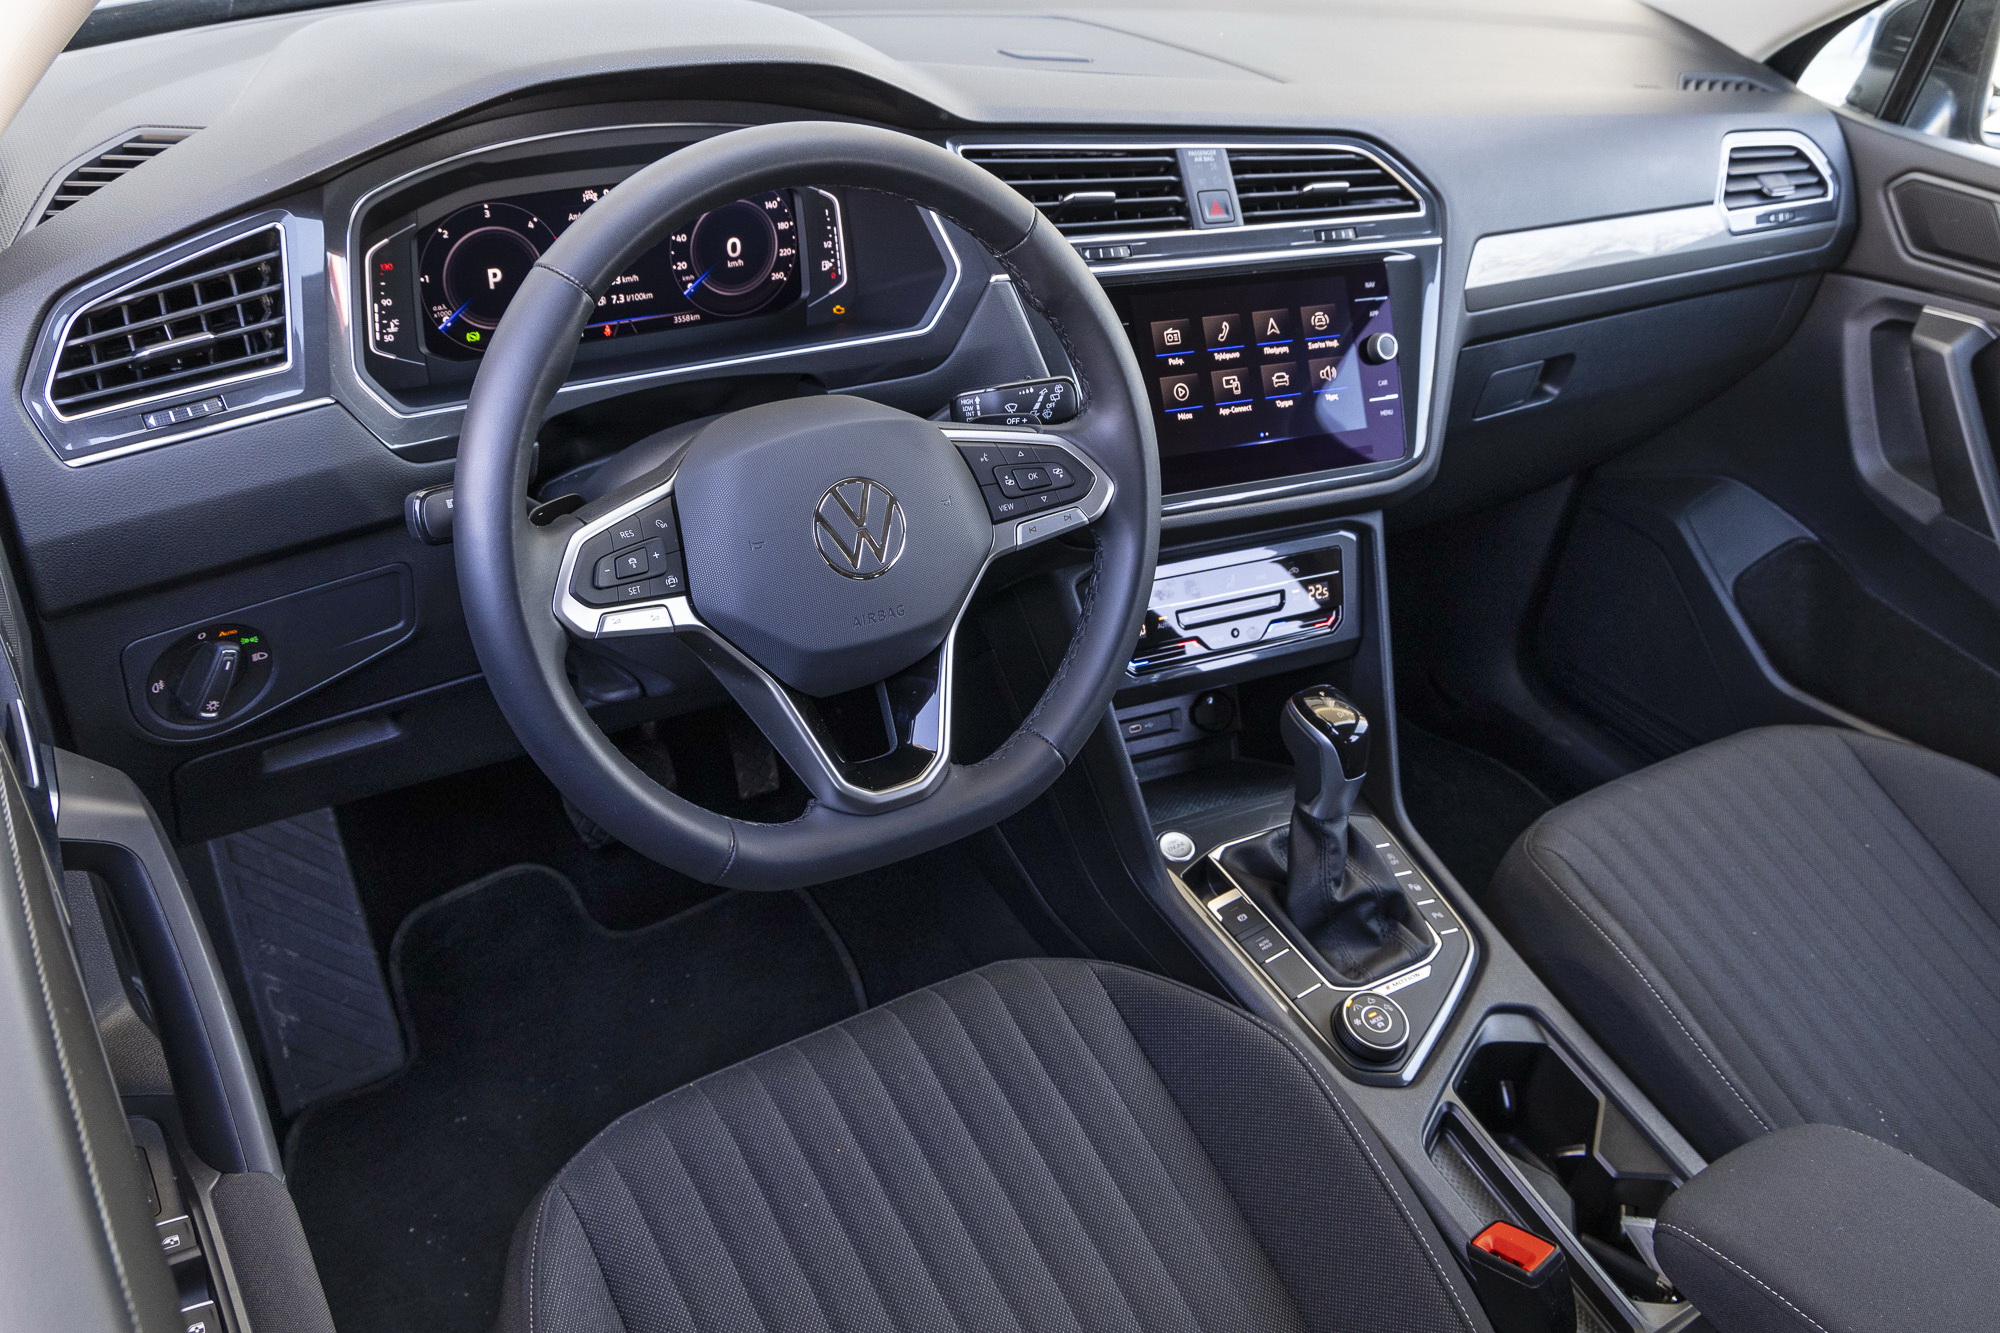 Test drive: Volkswagen Tiguan Allspace 2.0 TDI 150 PS 4Motion DSG, Photo © DRIVE Media Group/Thanassis Koutsogiannis